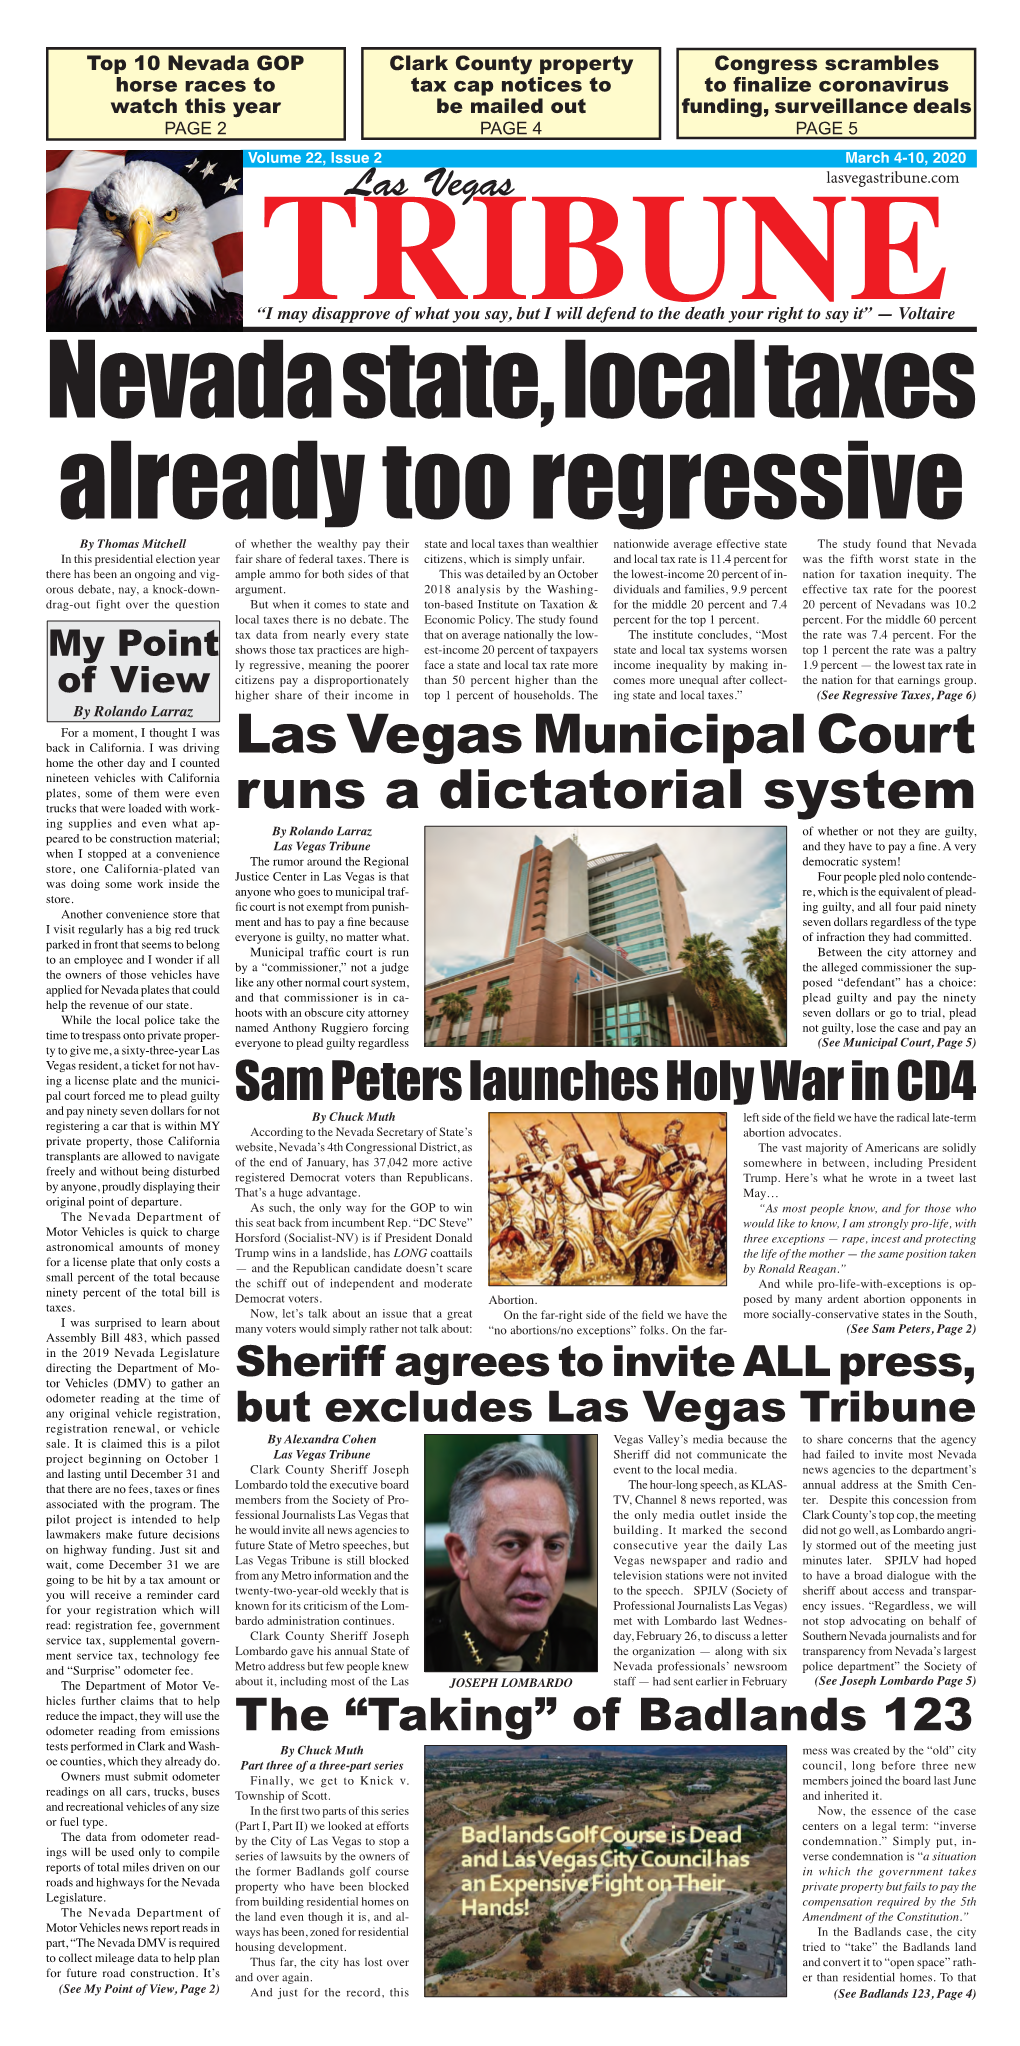 Las Vegas Municipal Court Runs a Dictatorial System